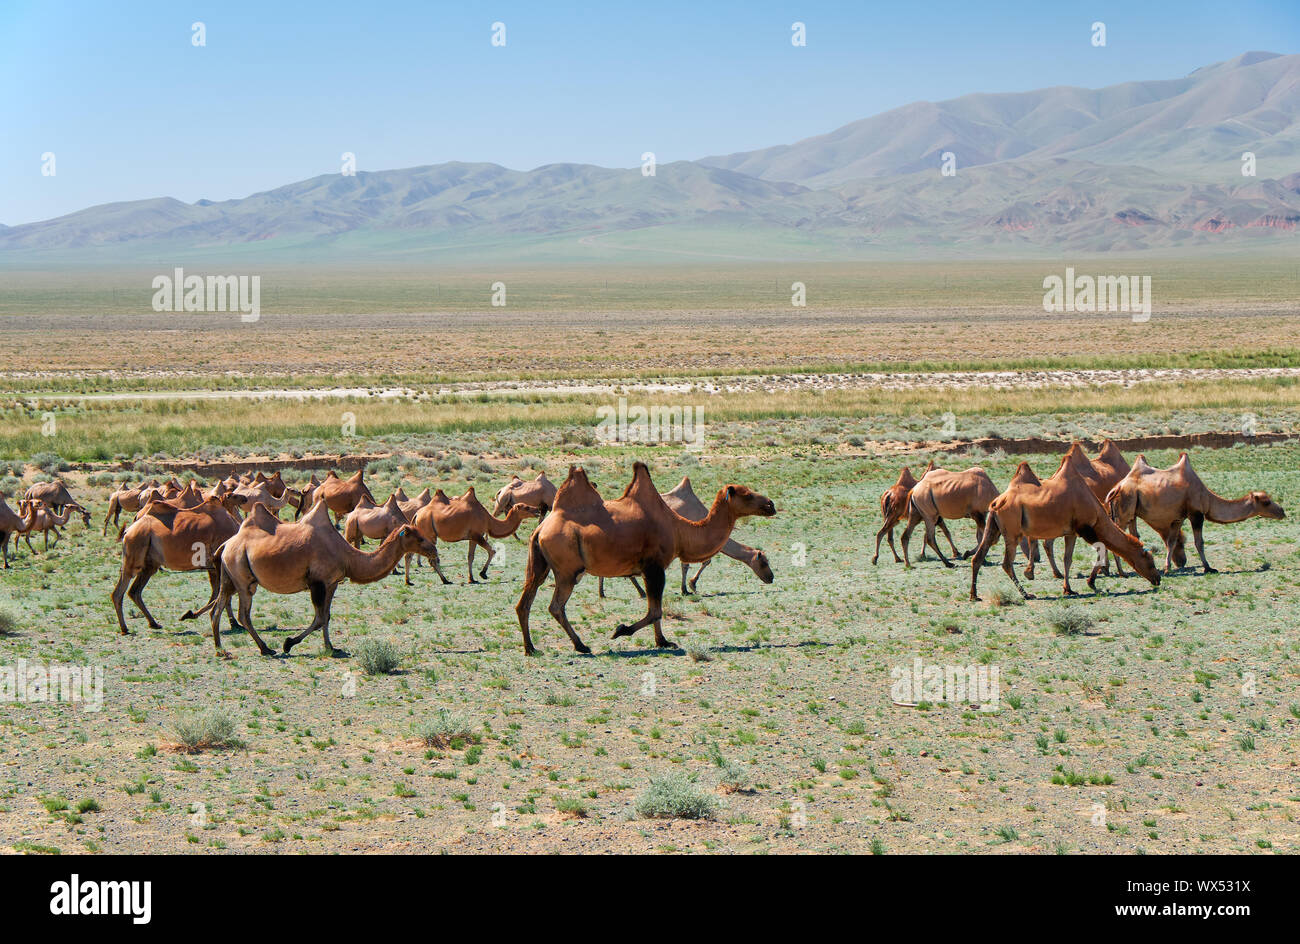 Bactrian camels in mongolian stone desert in Mongolia. Stock Photo